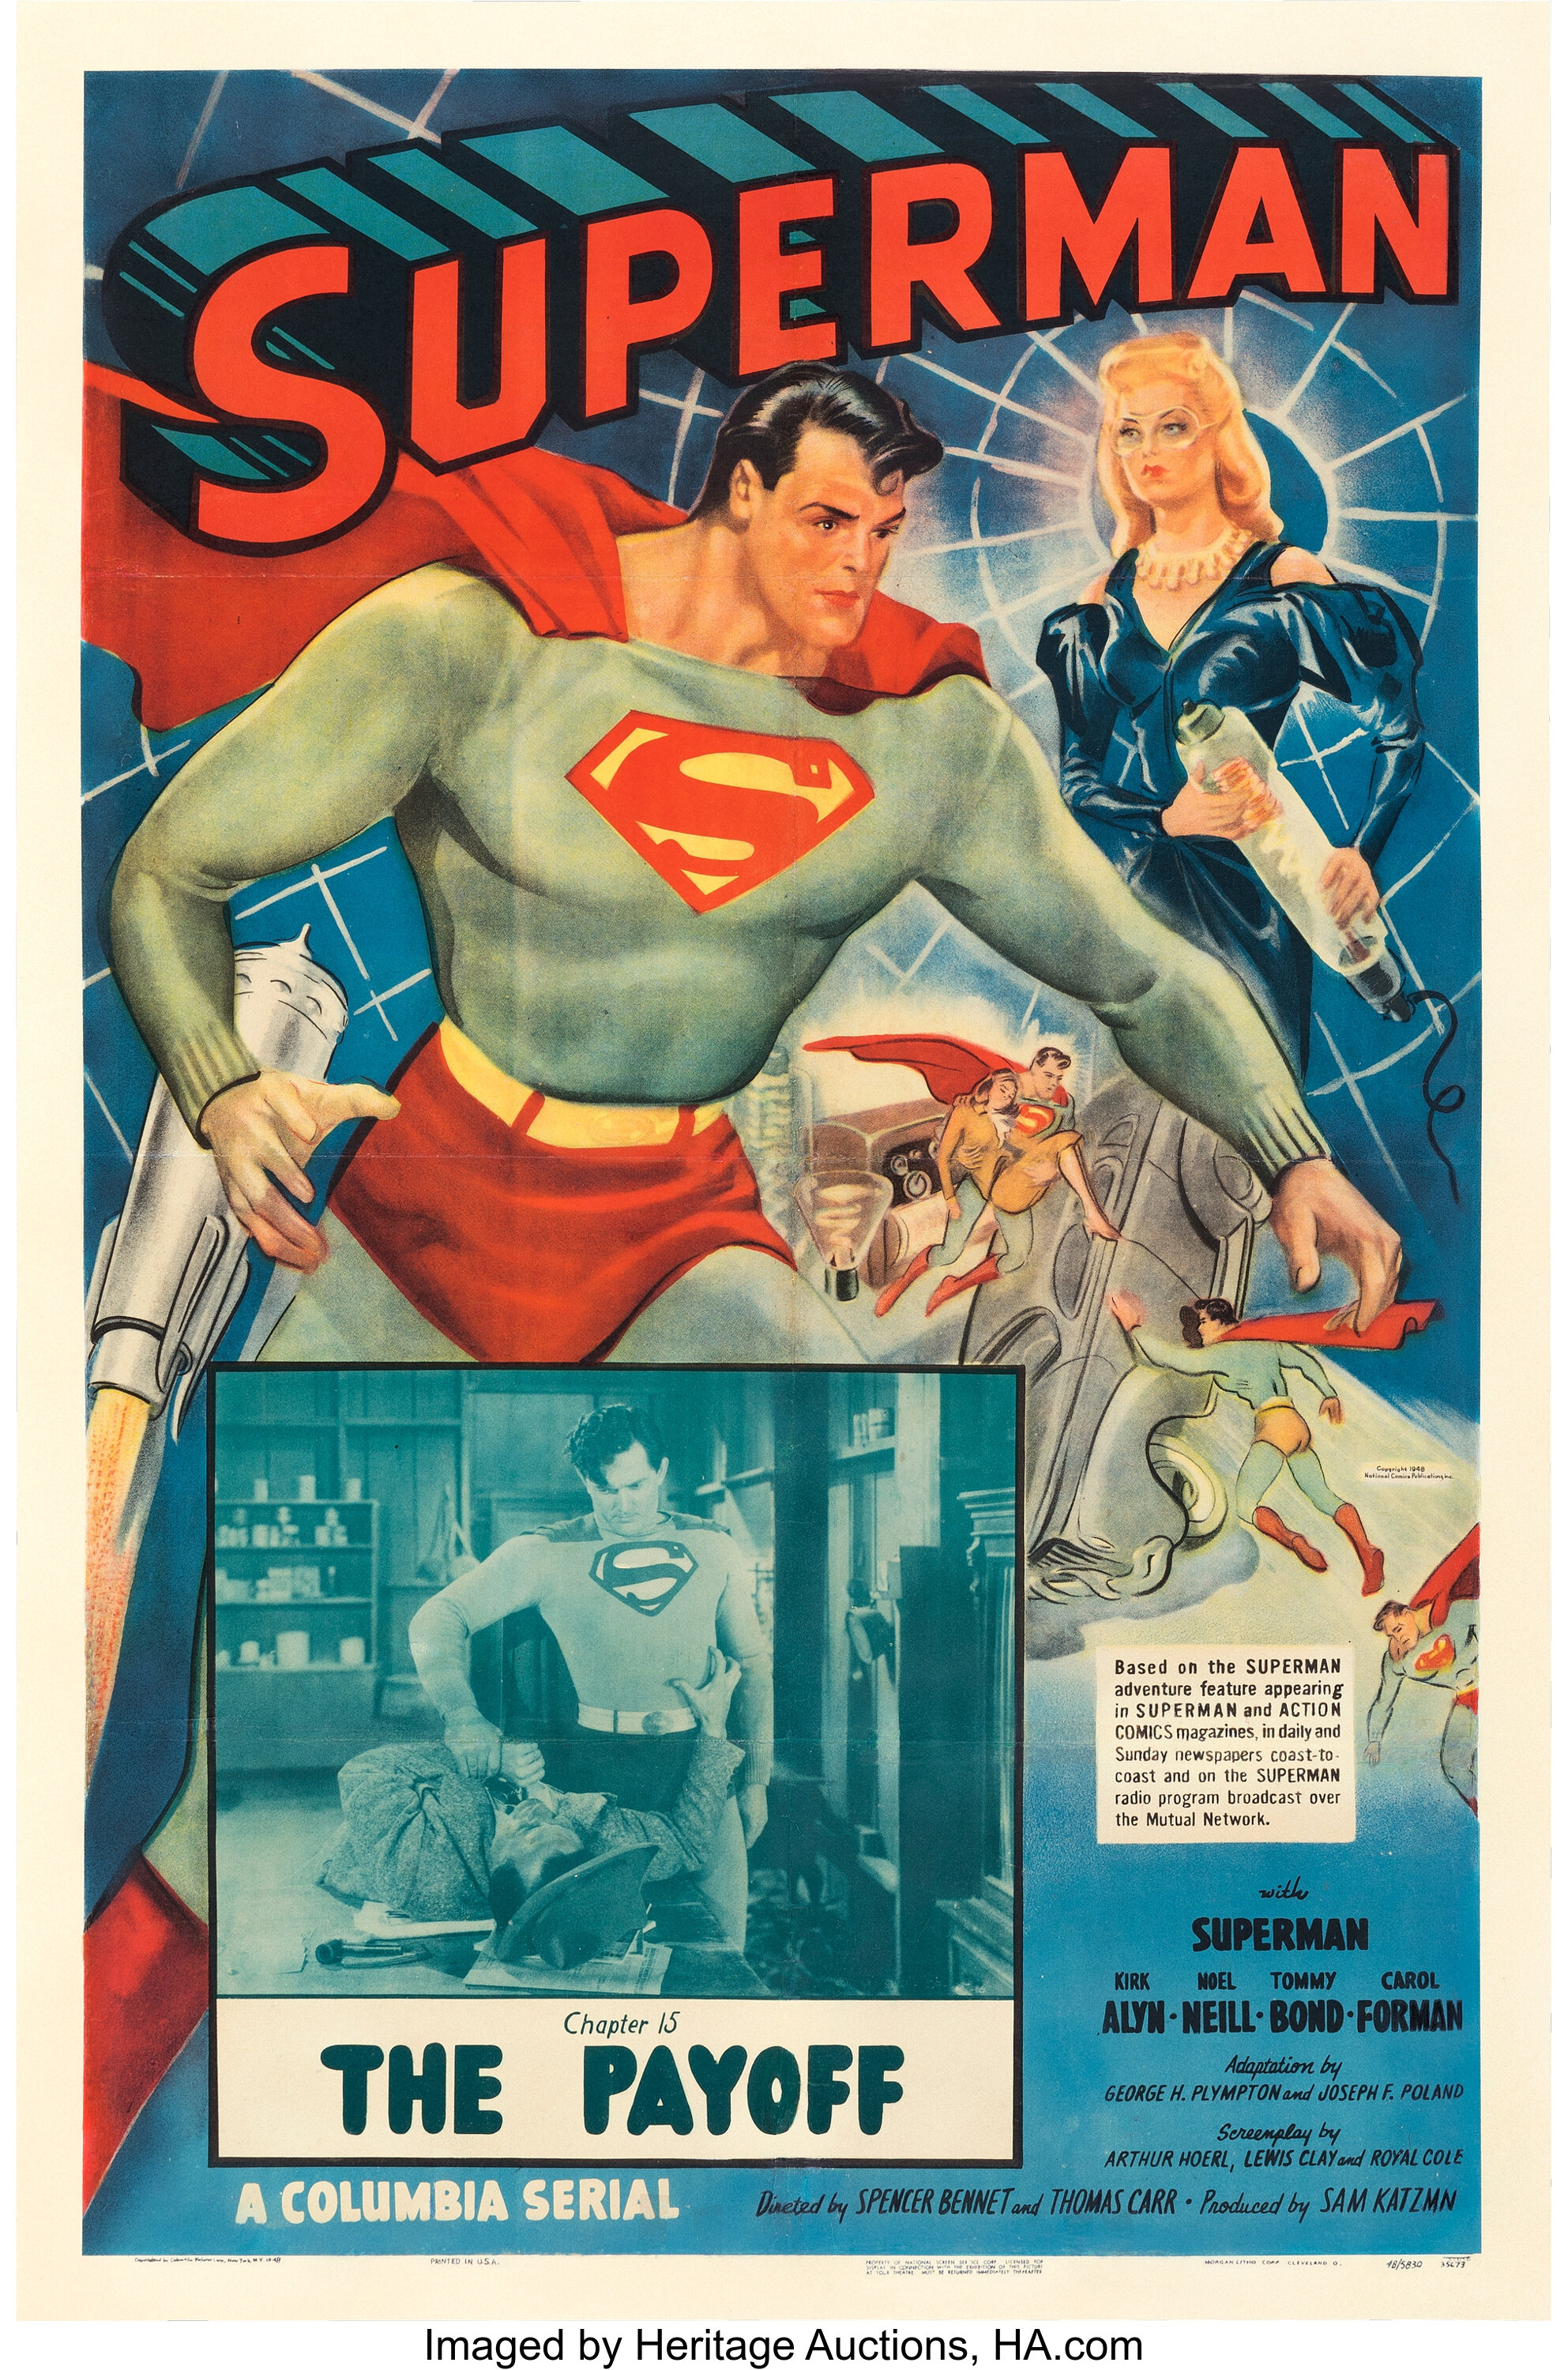 https://www.fortalezadelasoledad.com/imagenes/2023/02/09/heritage_auctions_superman_serial_poster.jpg